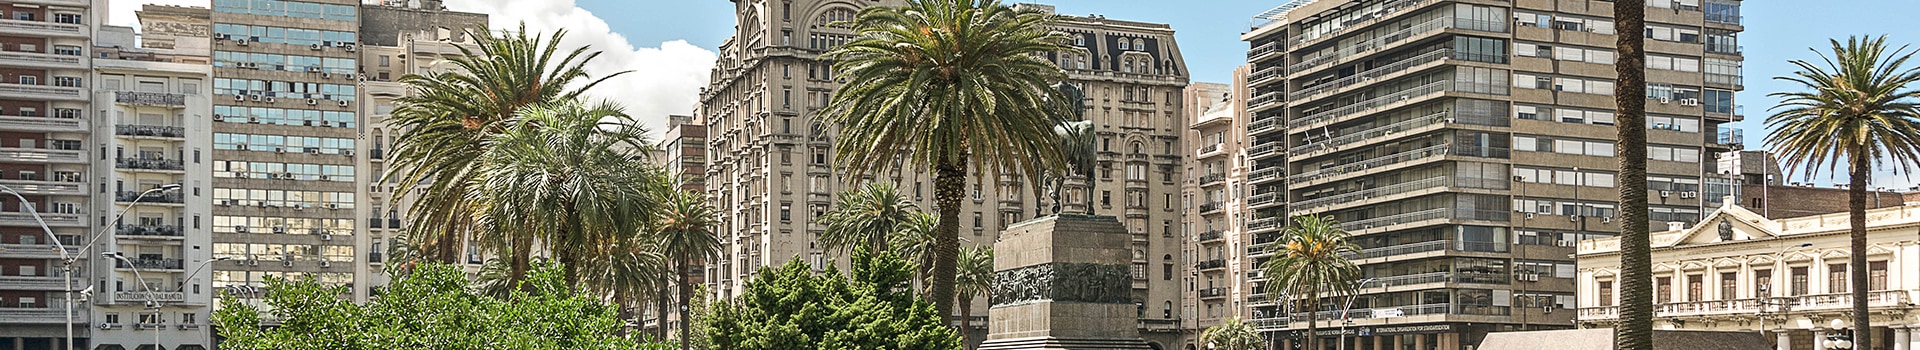 Porto alegre - Montevideo - carrasco intl